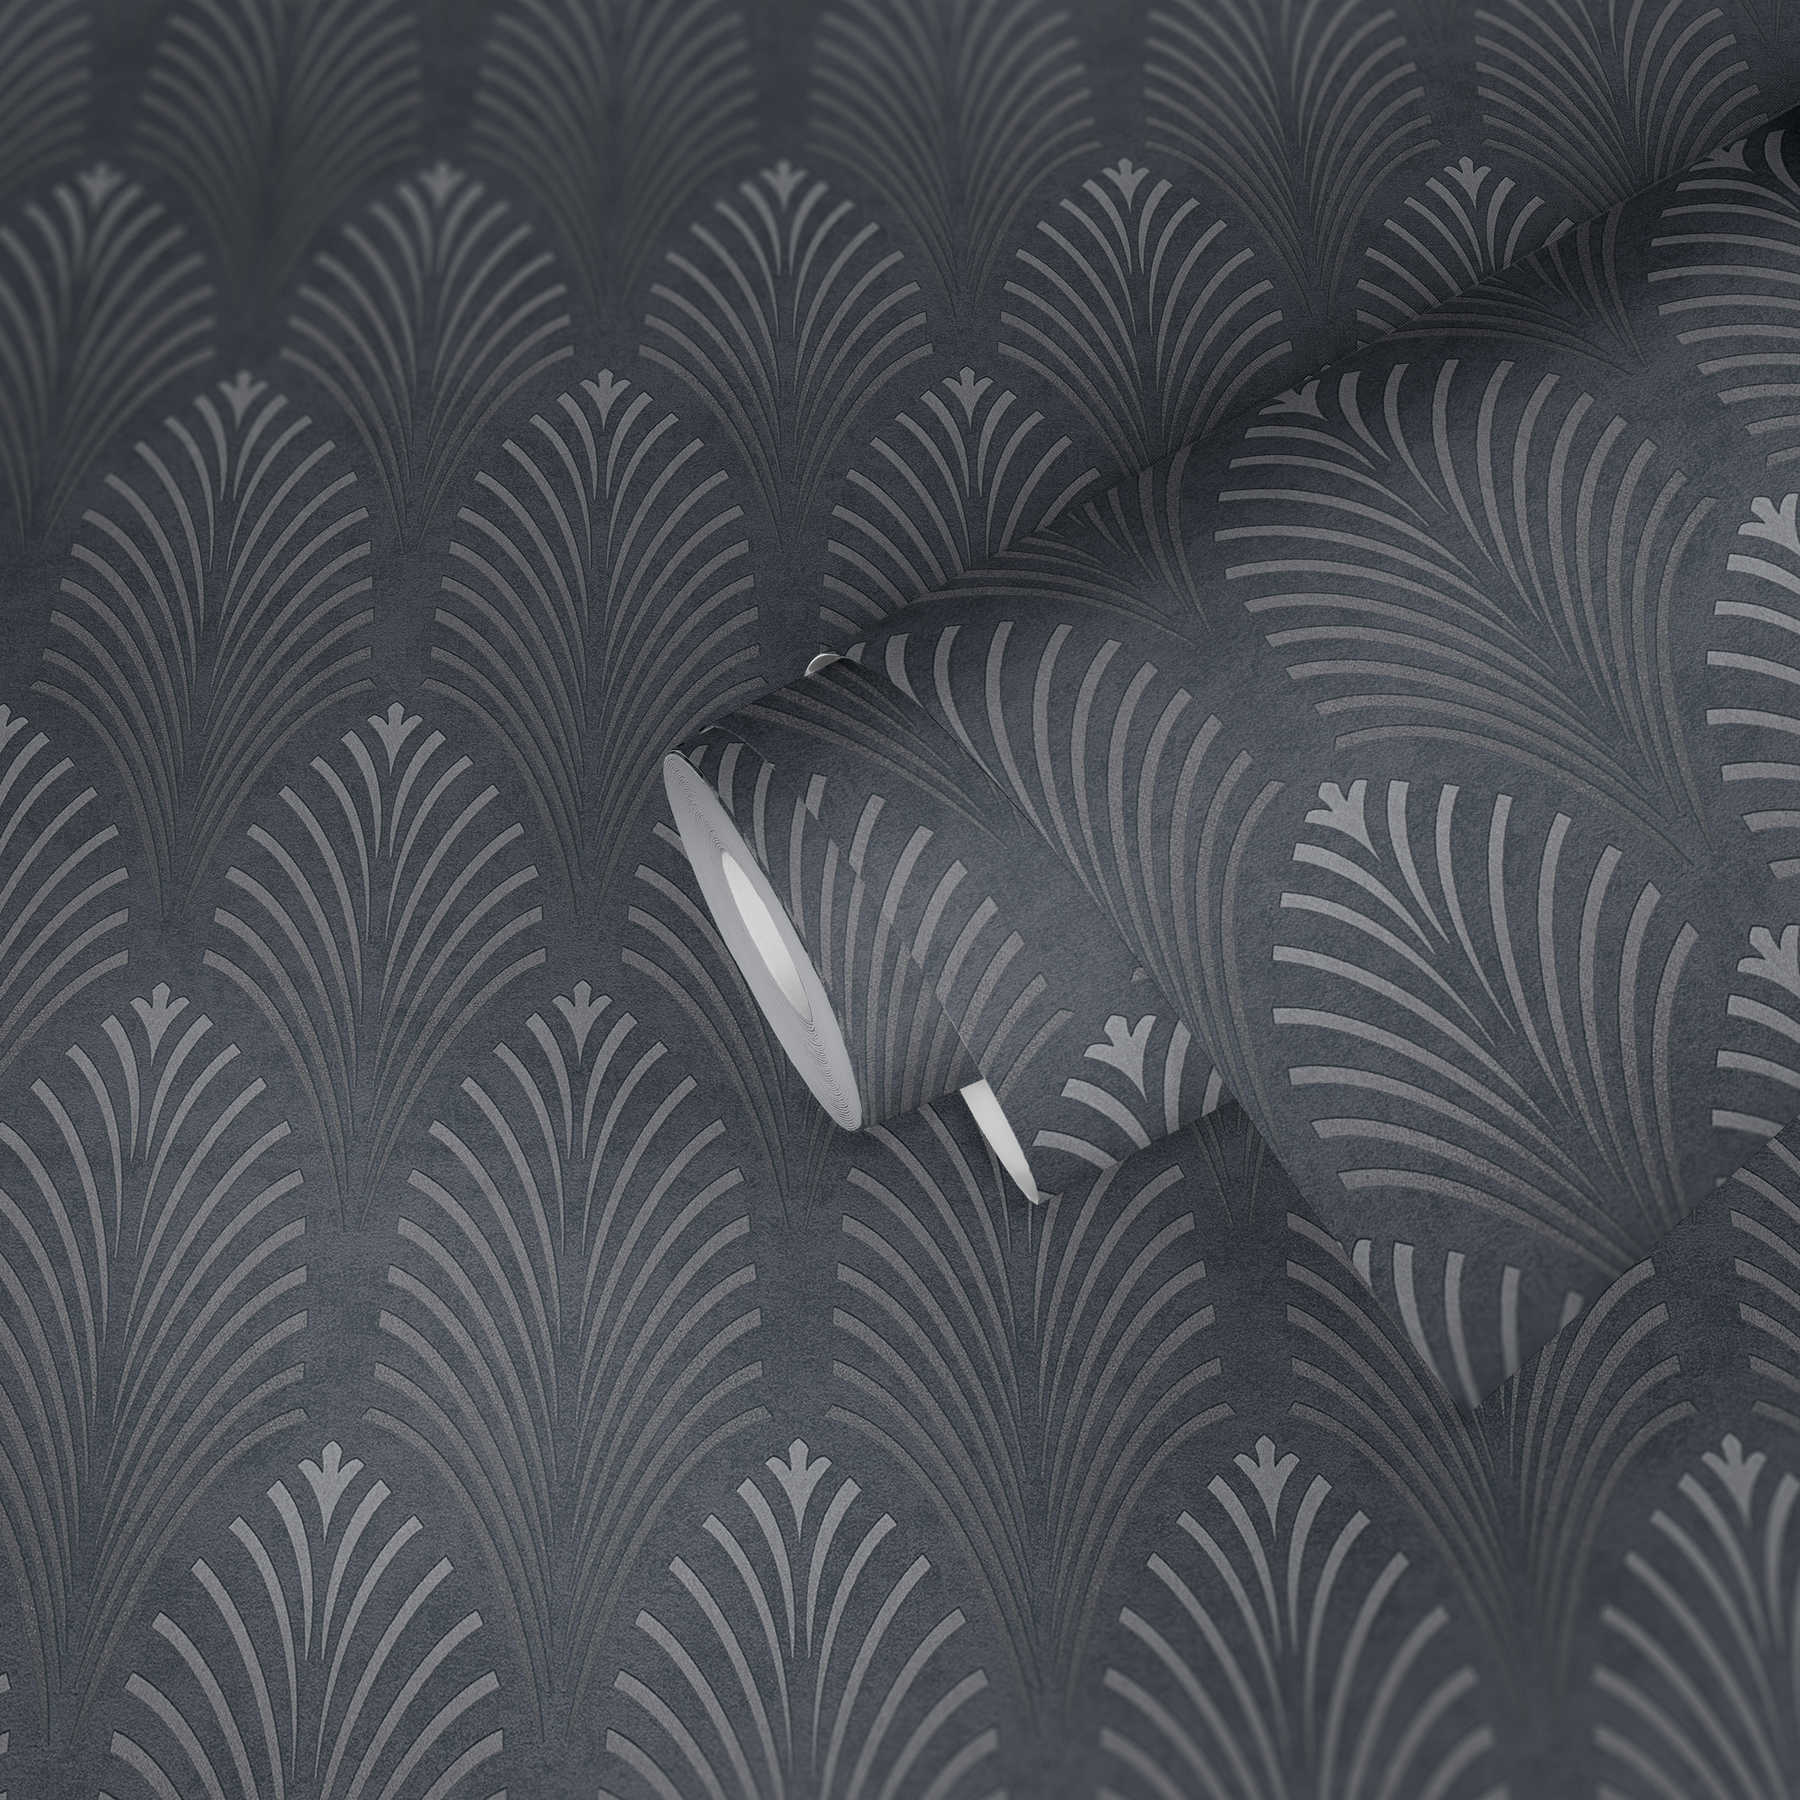             Retro wallpaper art deco style with geometric pattern - black, silver, grey
        